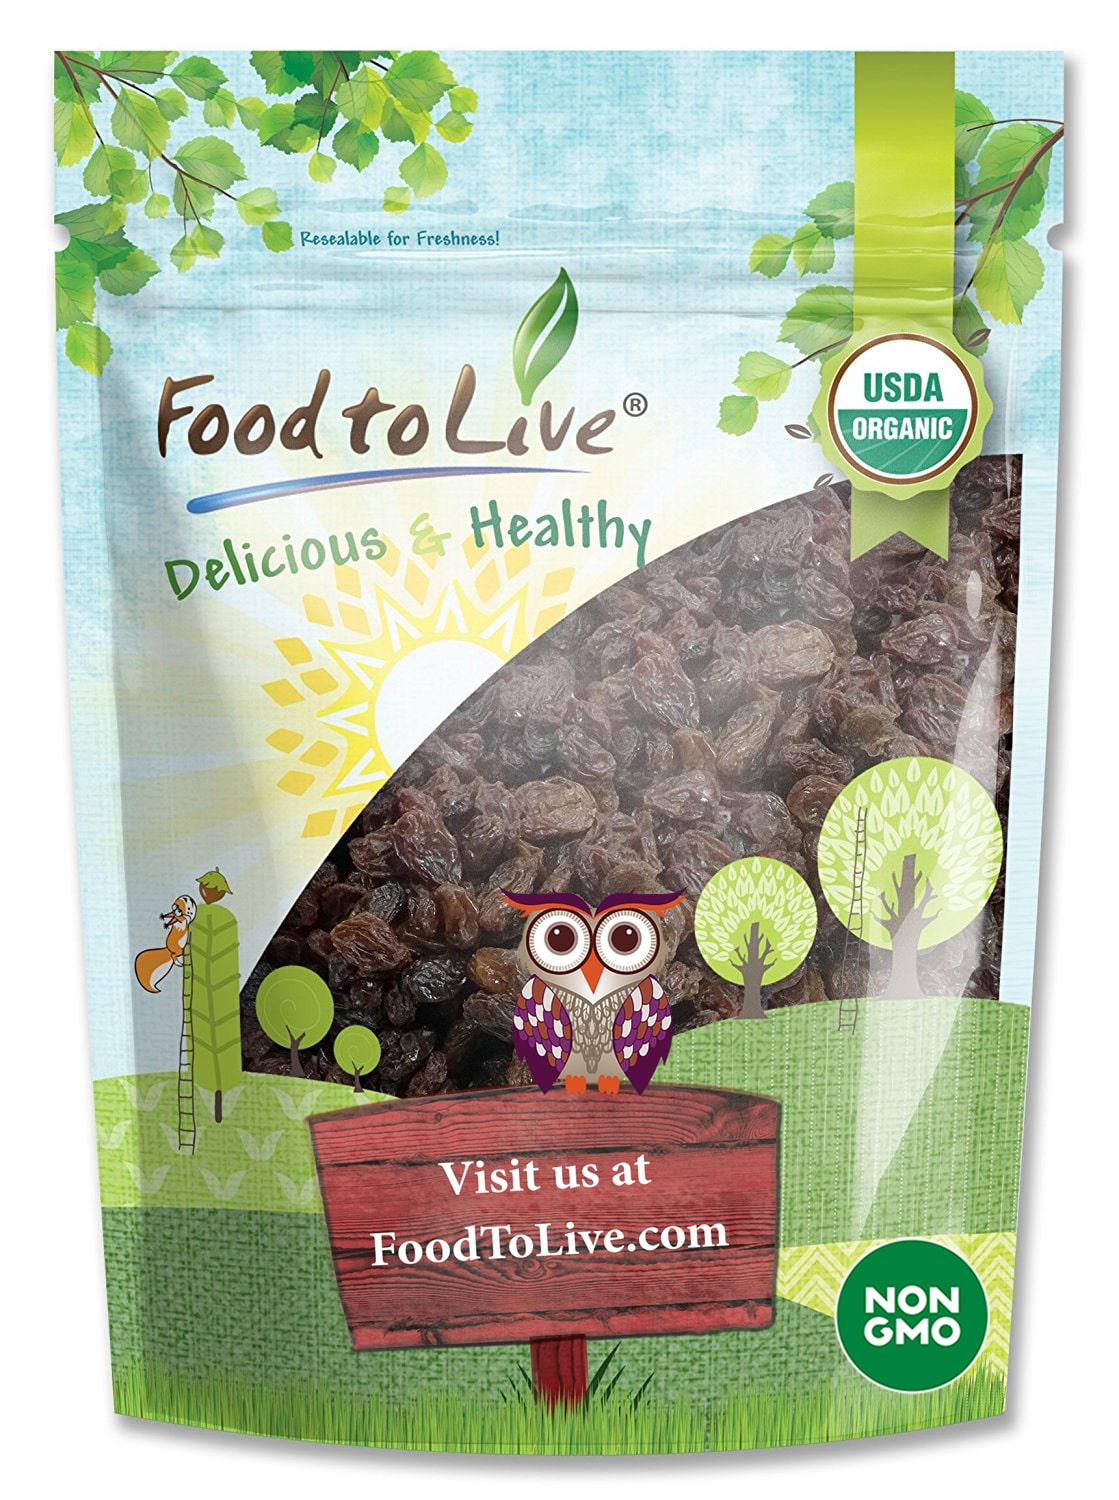 California Organic Raisins - Thompson Seedless Select, Sun-Dried, Non-GMO, Kosher, Unsulphured, Bulk, No Oil Added - by Food to Live